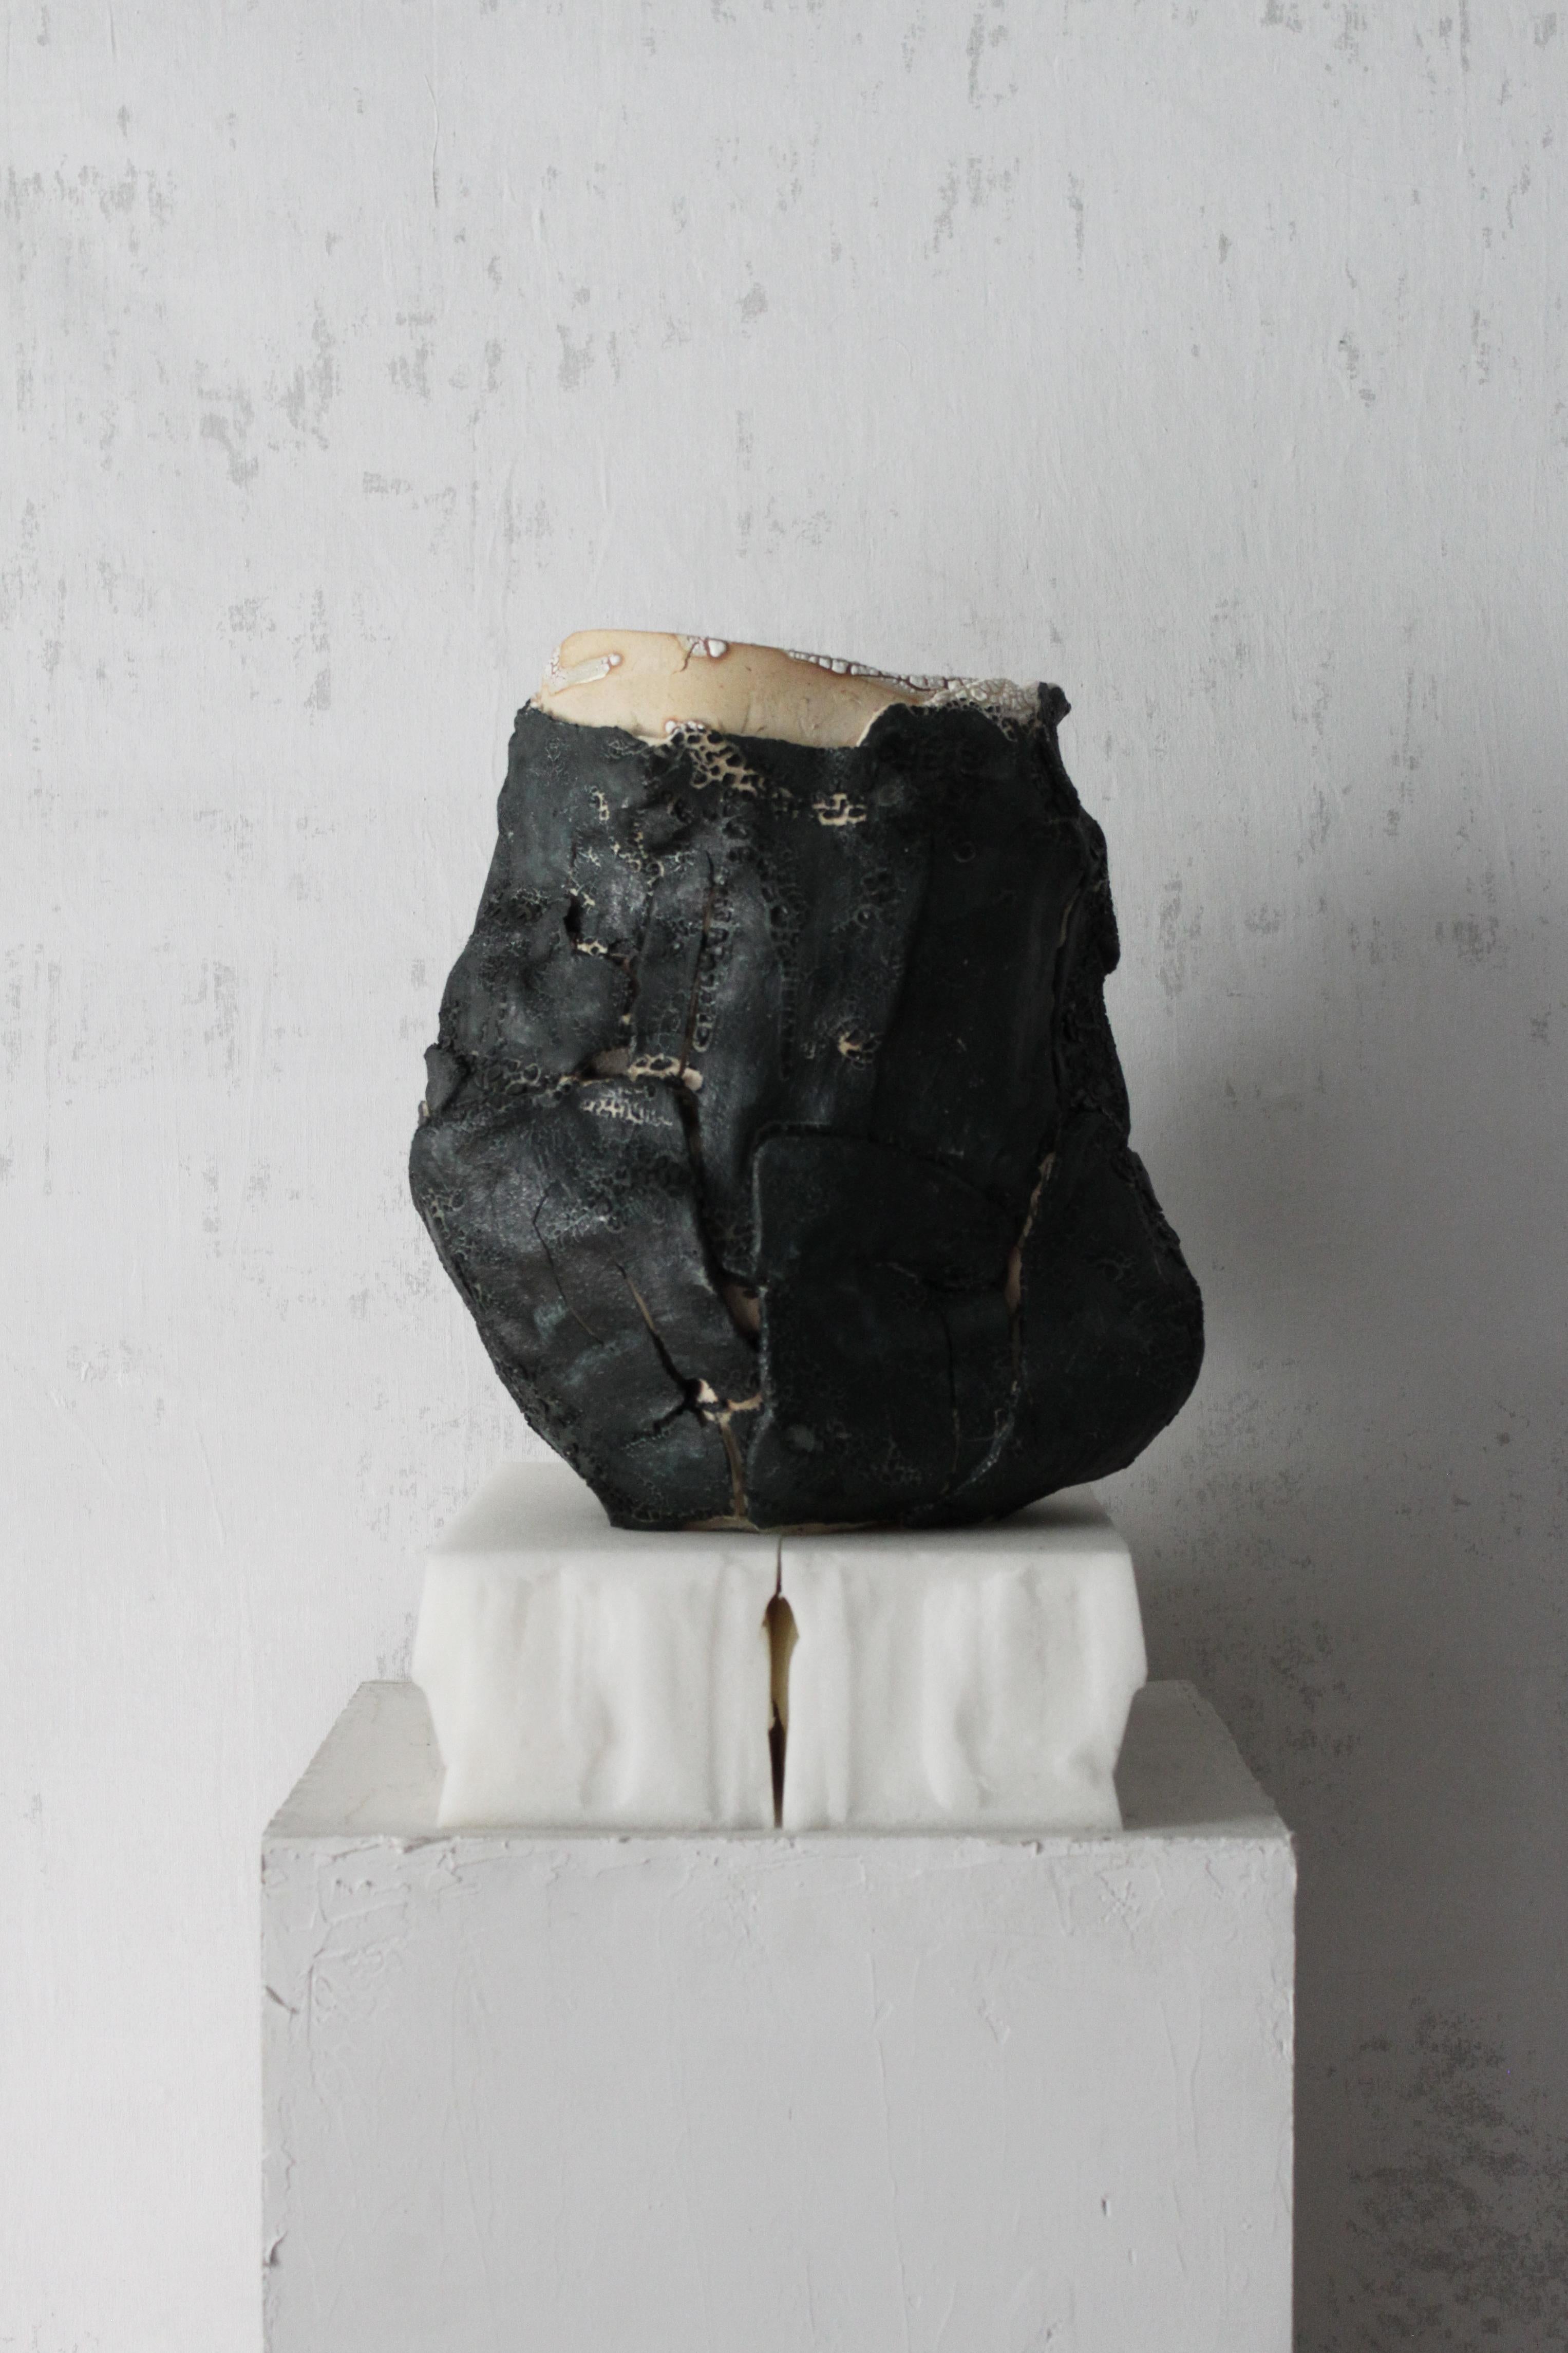 Enyo vase by lava studio ceramics.
Unique, 2020
Materials: Glazed stoneware
Dimensions: H 27 cm x D 28 cm

Lava ceramics is a collective studio based in Athens.